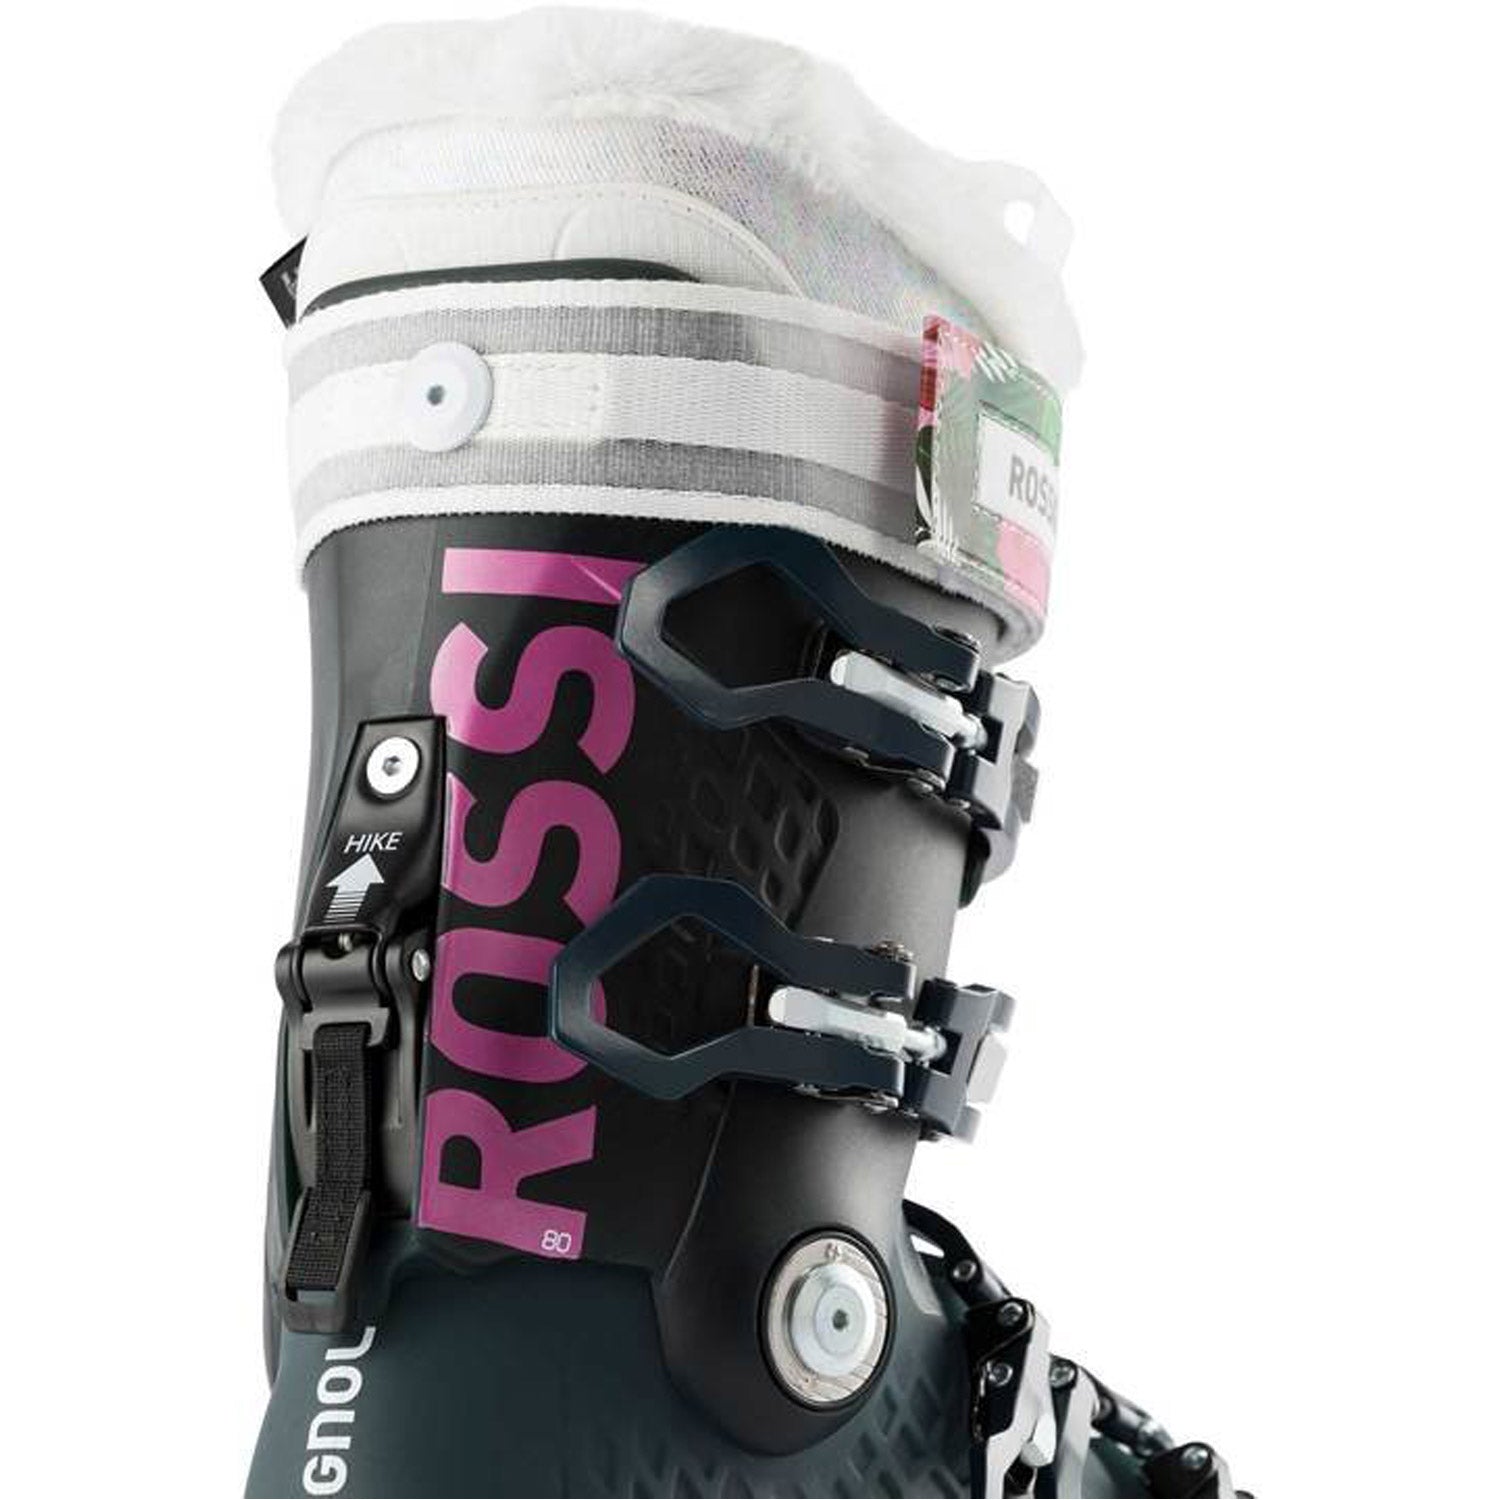 Rossignol Alltrack 80W Ski Boot 2020